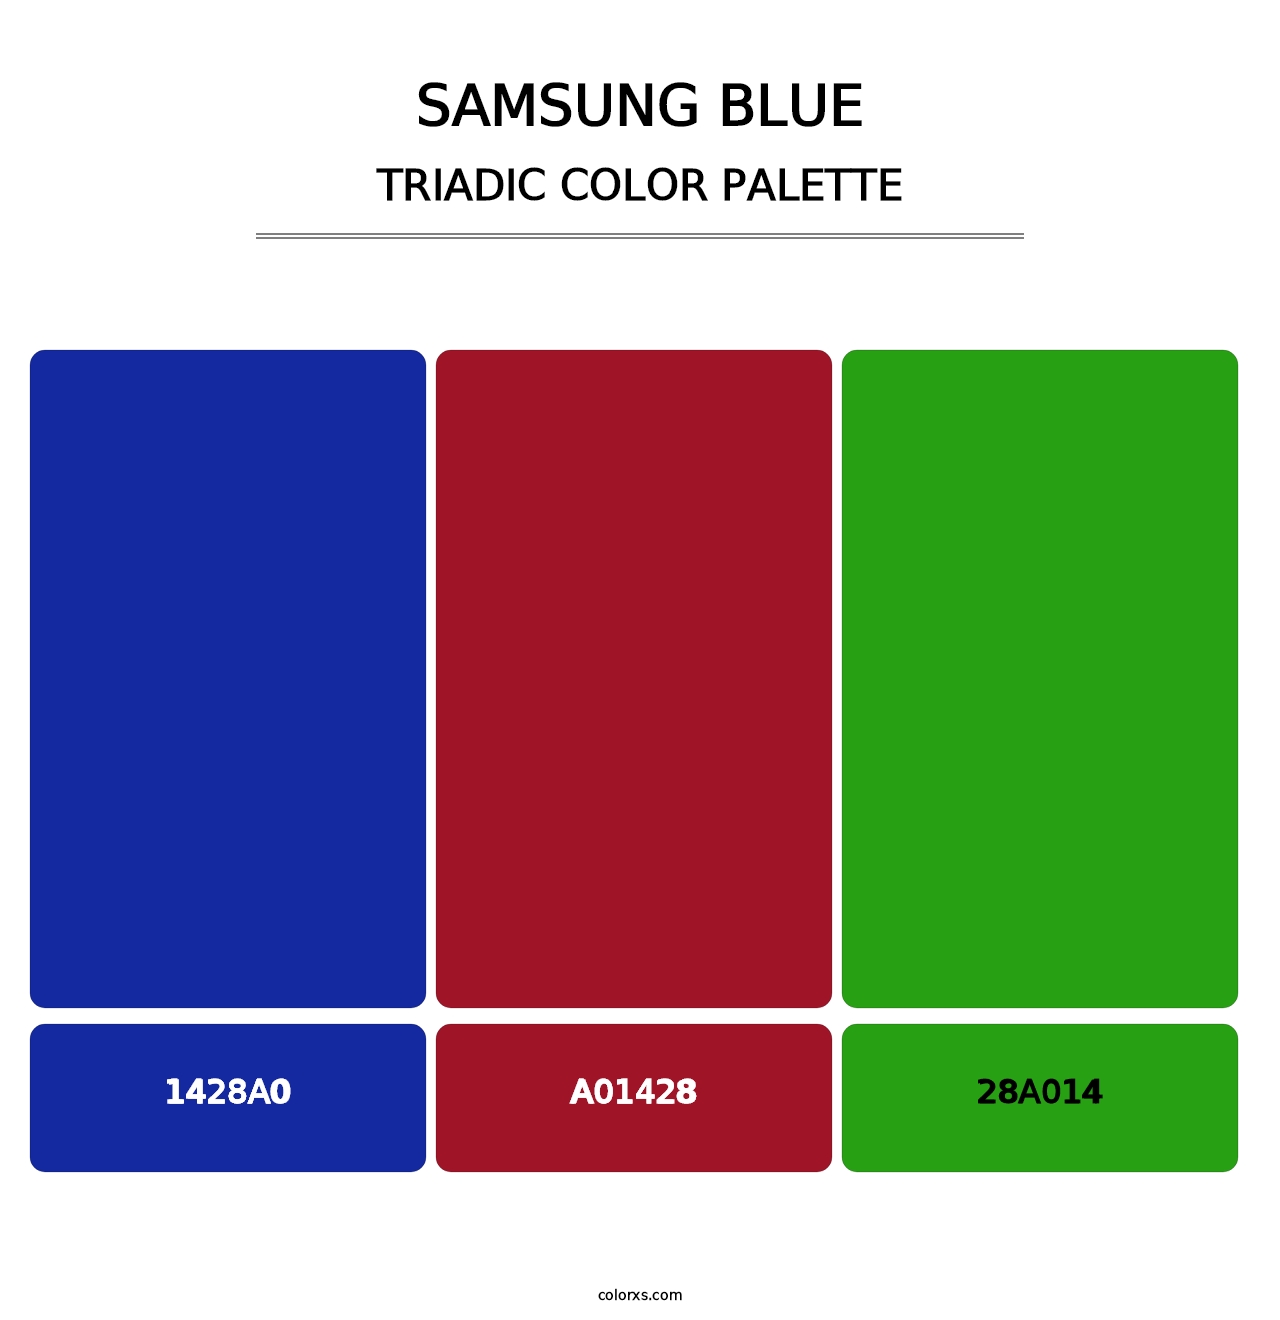 Samsung Blue - Triadic Color Palette